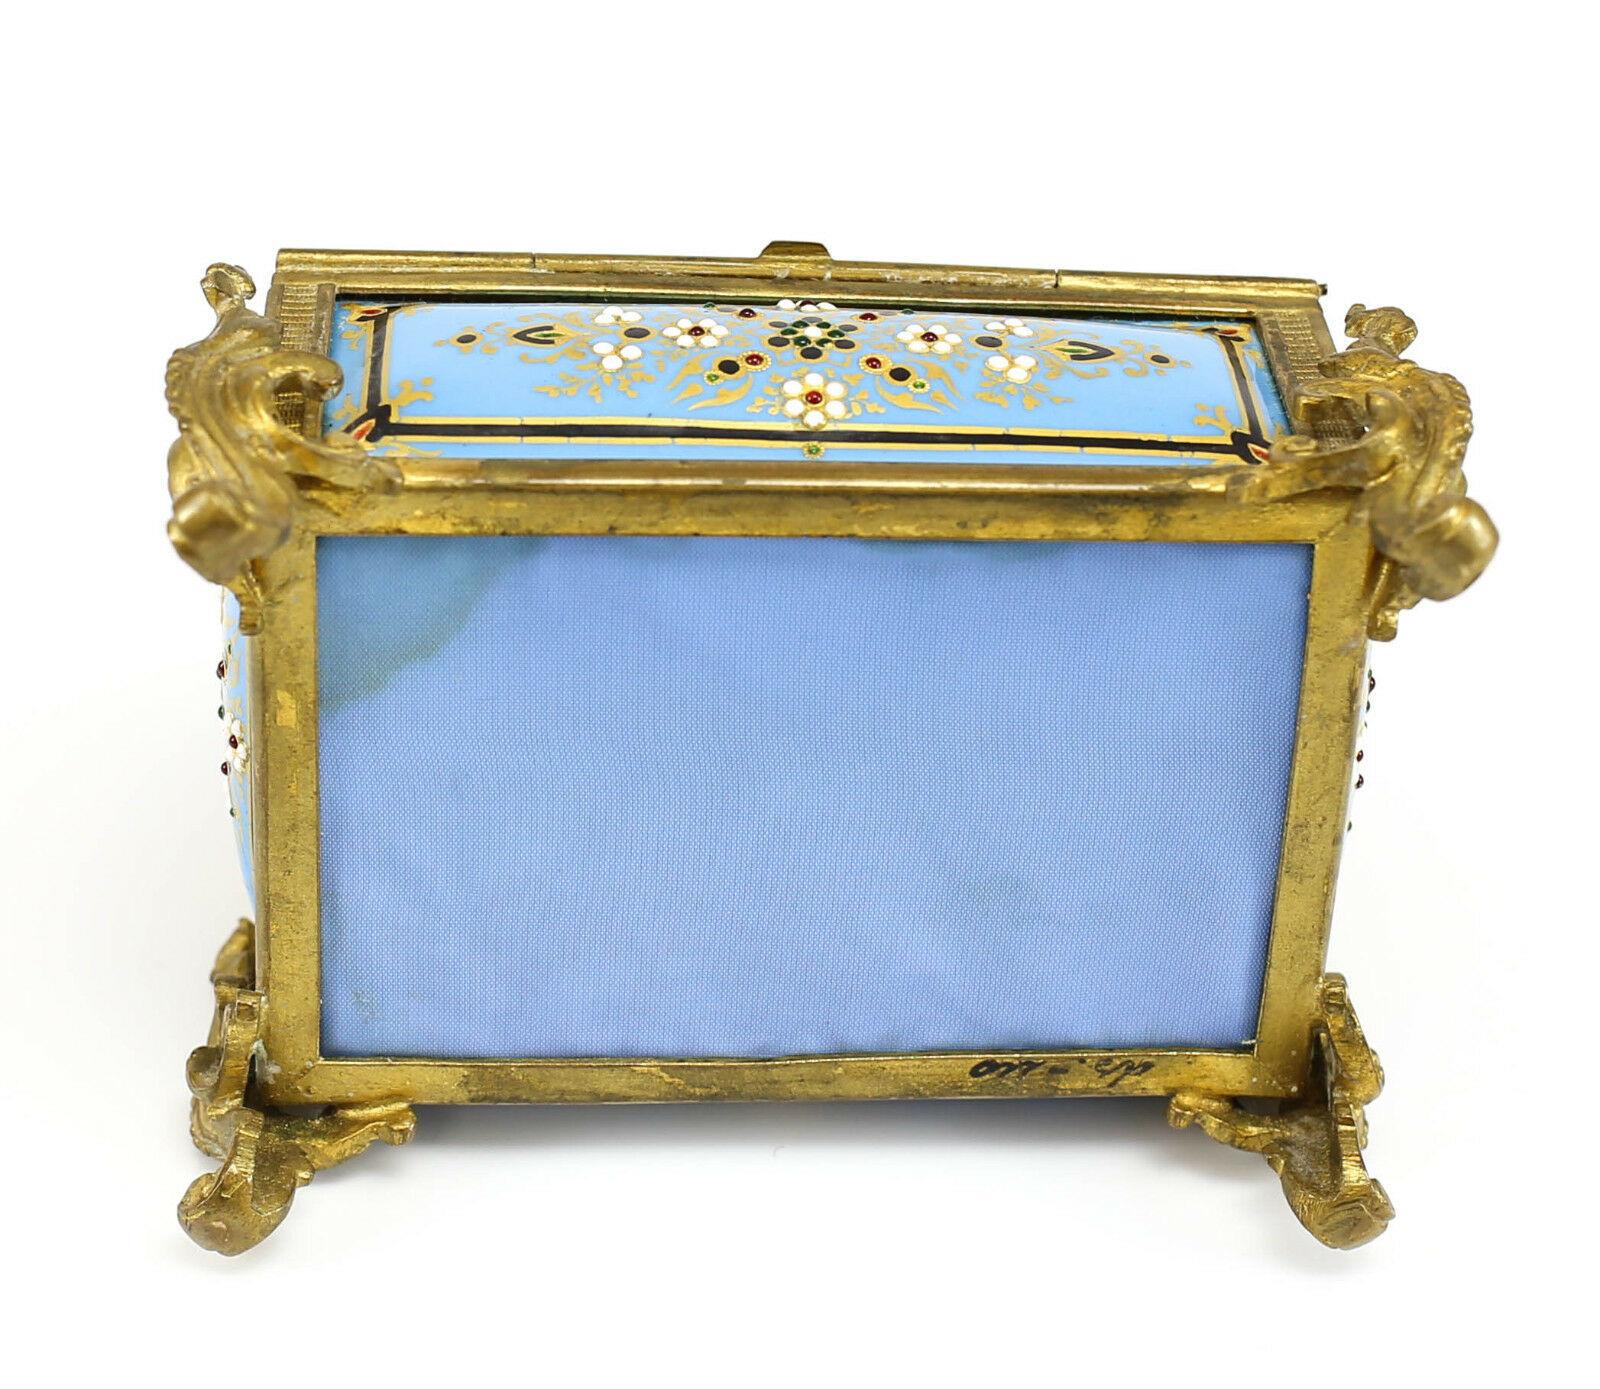 20th Century French Gilt Bronze & Porcelain Jewelry Box, Powder Blue & Raised Floral Enamel